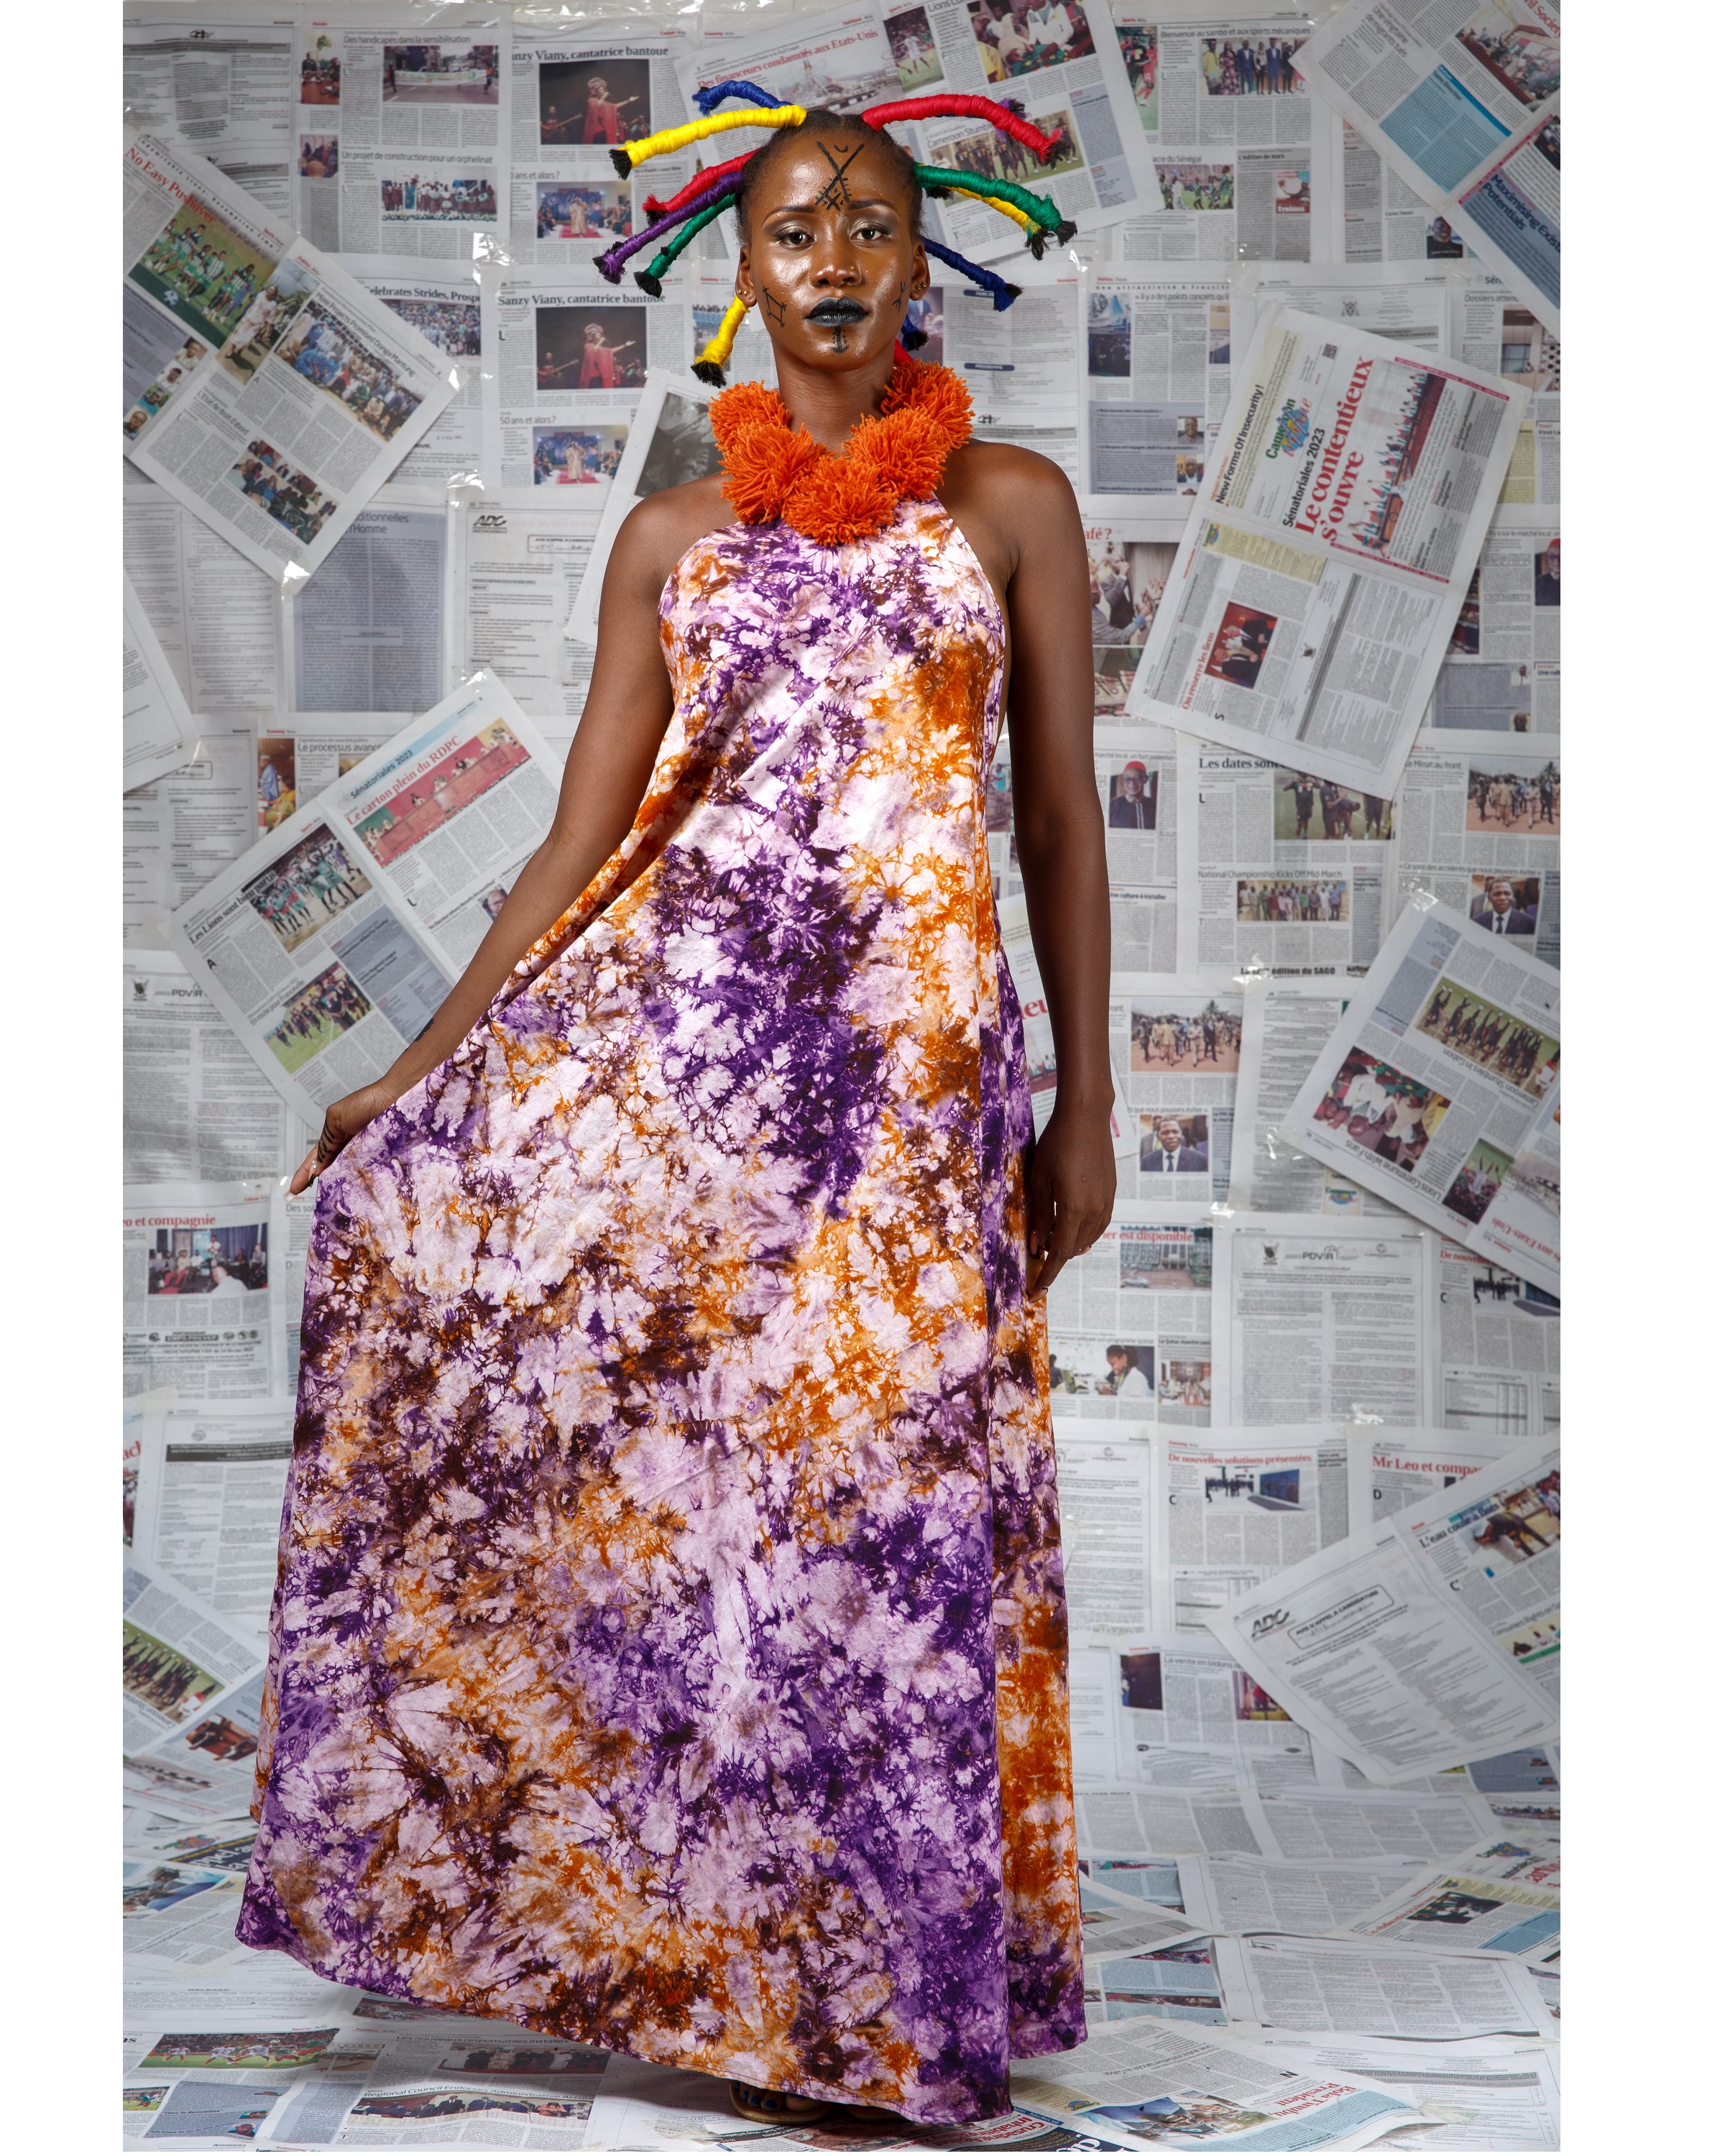 Image 2 of Nya Purple and Orange batik dress (Afritudes)